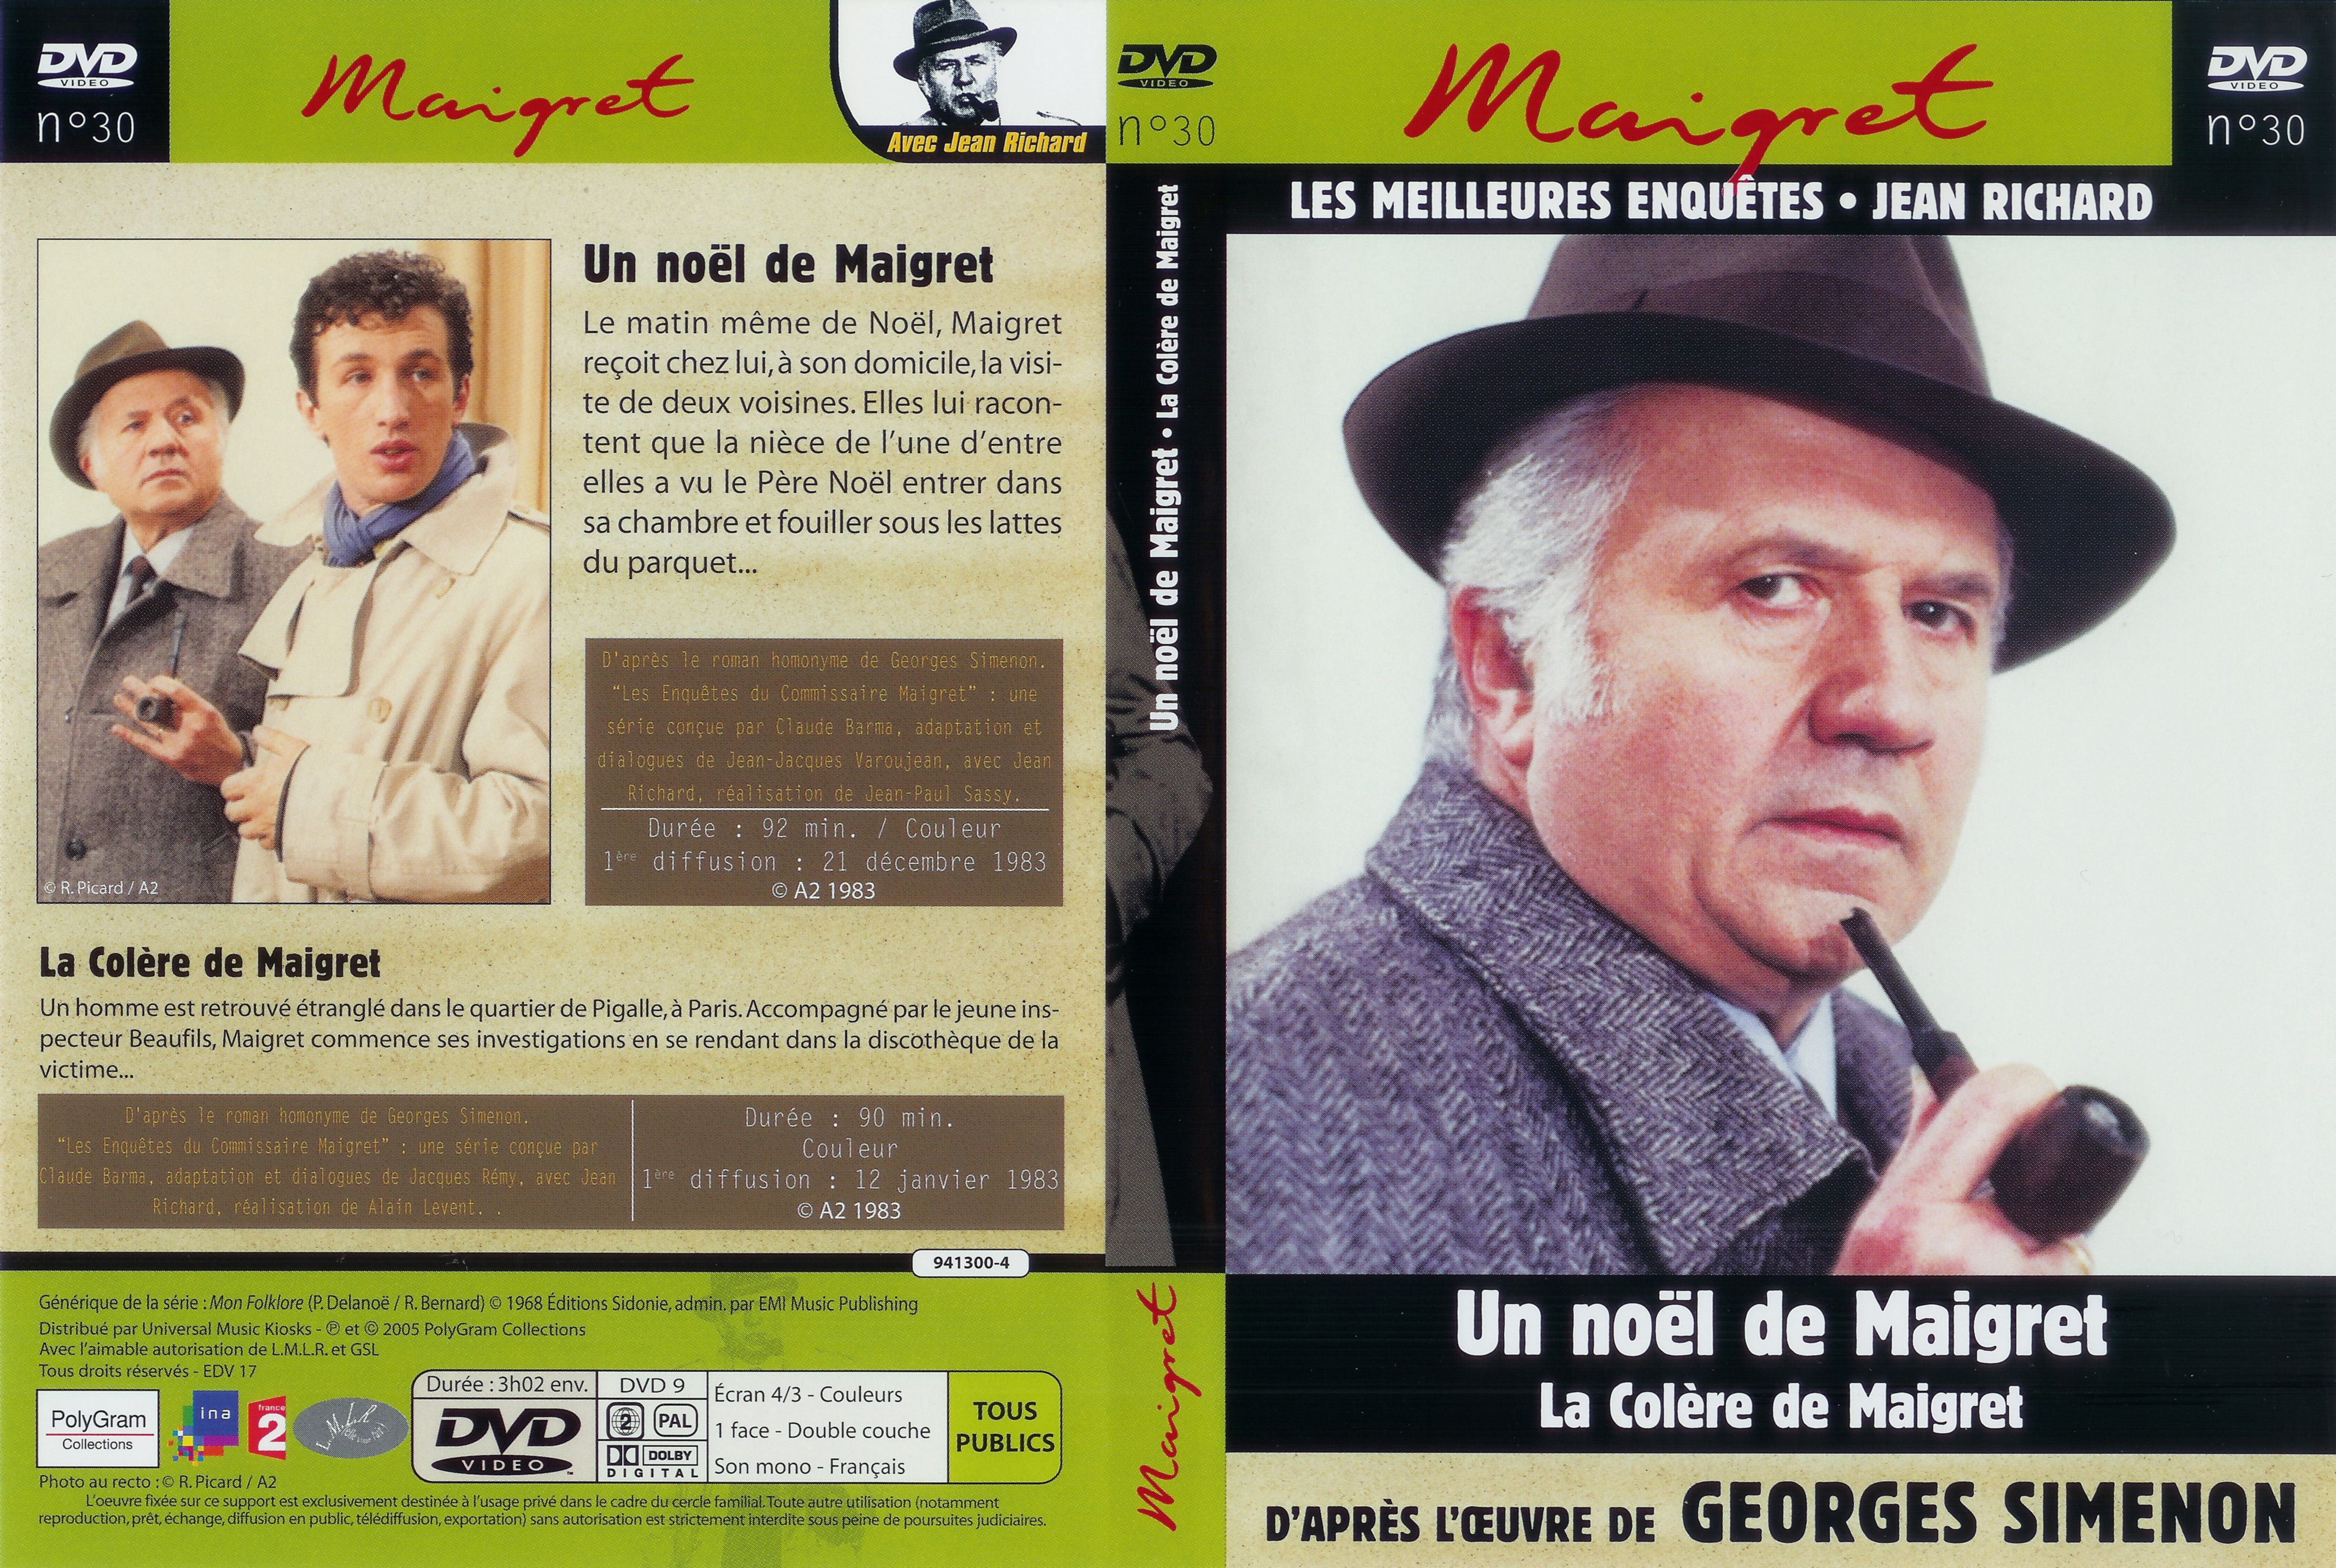 Jaquette DVD Maigret (Jean Richard) vol 30